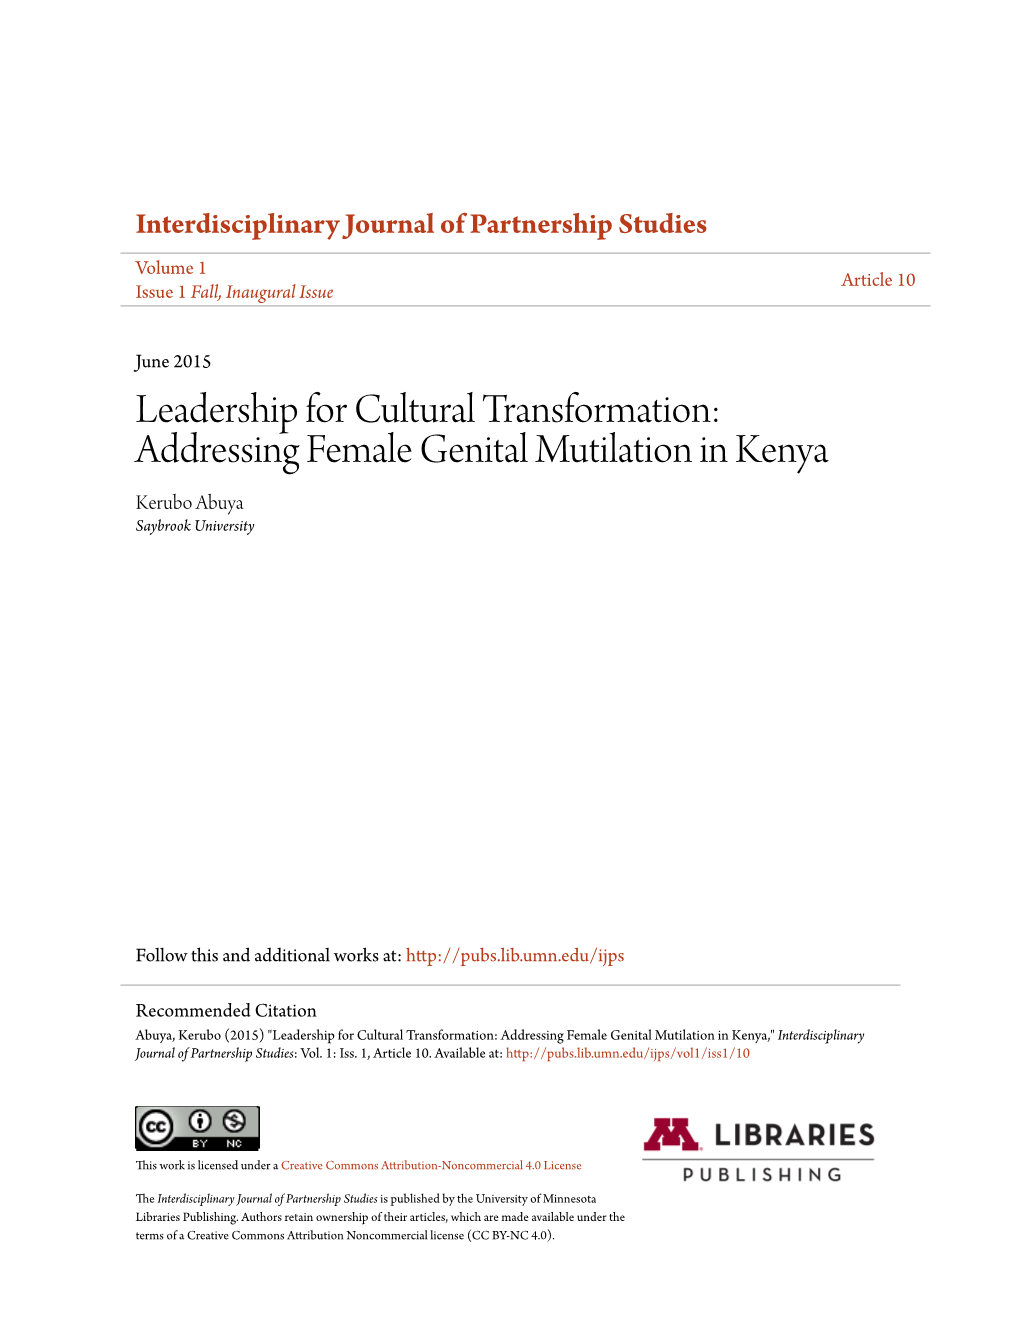 Addressing Female Genital Mutilation in Kenya Kerubo Abuya Saybrook University